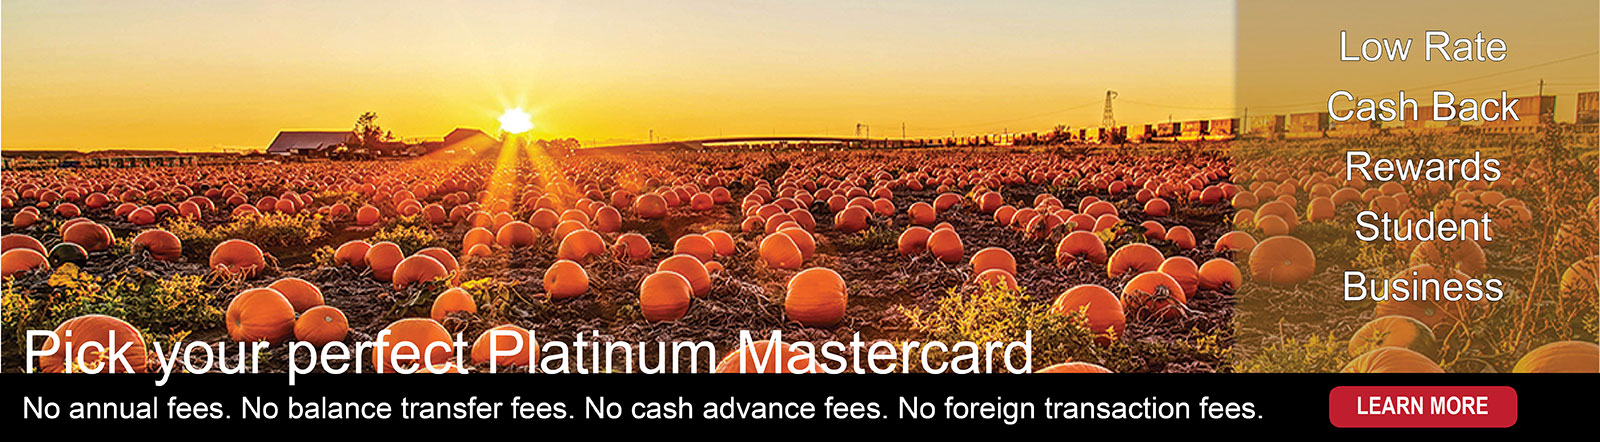 Pick your perfect Platinum Mastercard. No annual fees. No balance transfer fees. No cash advance fees. No foreign transaction fees.